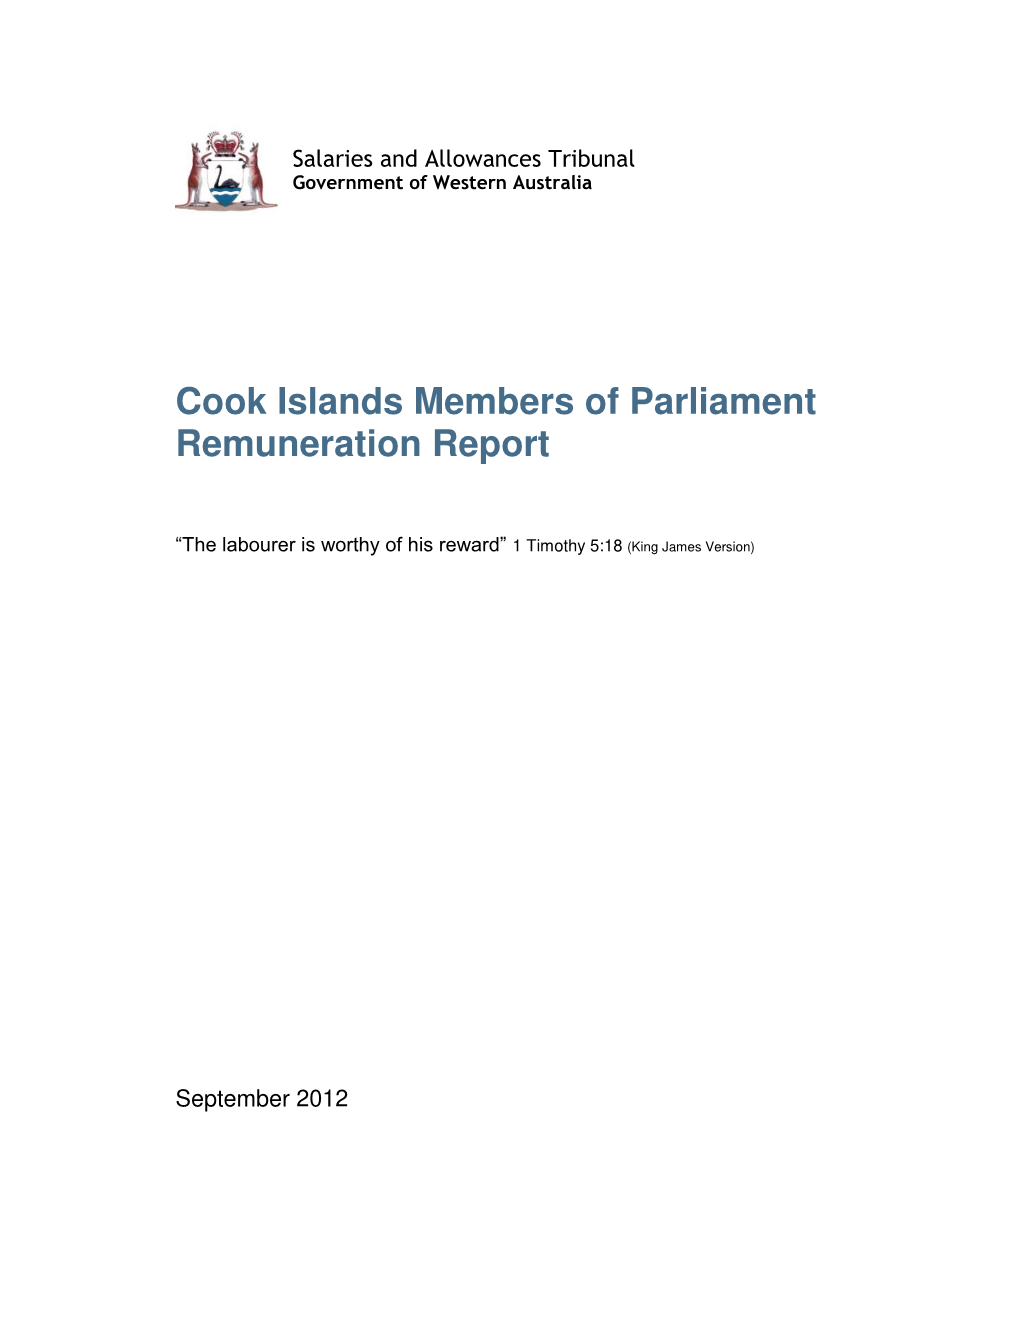 Cook Islands Members of Parliament Remuneration Report